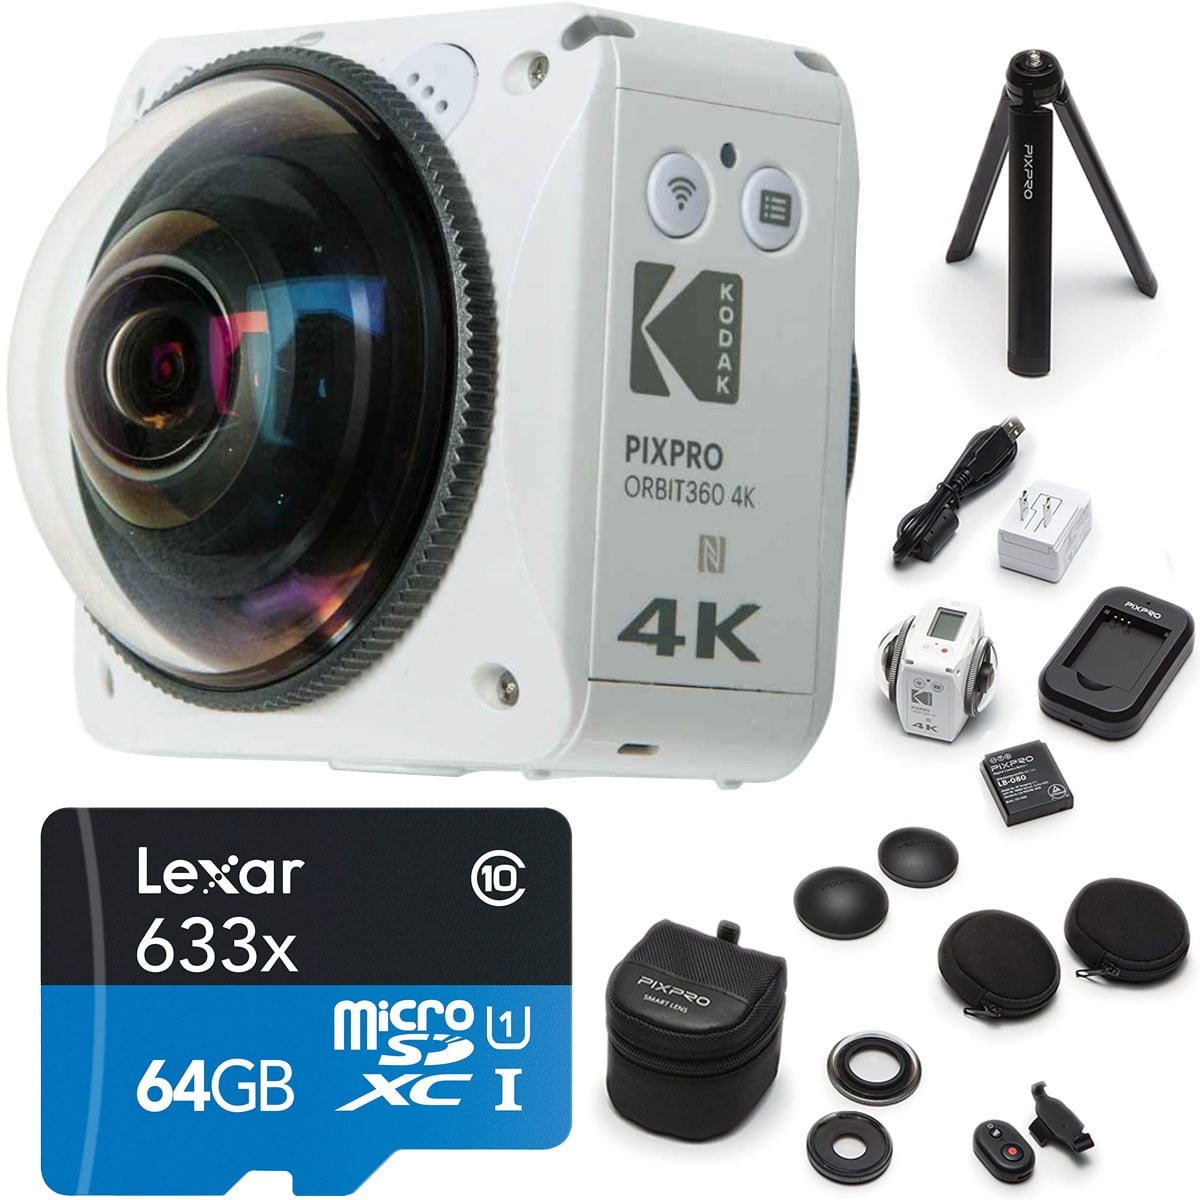 Kodak Pixpro Orbit360 4K VR Camera with Adventure Pack Bundle with 64GB Card Walmart.com